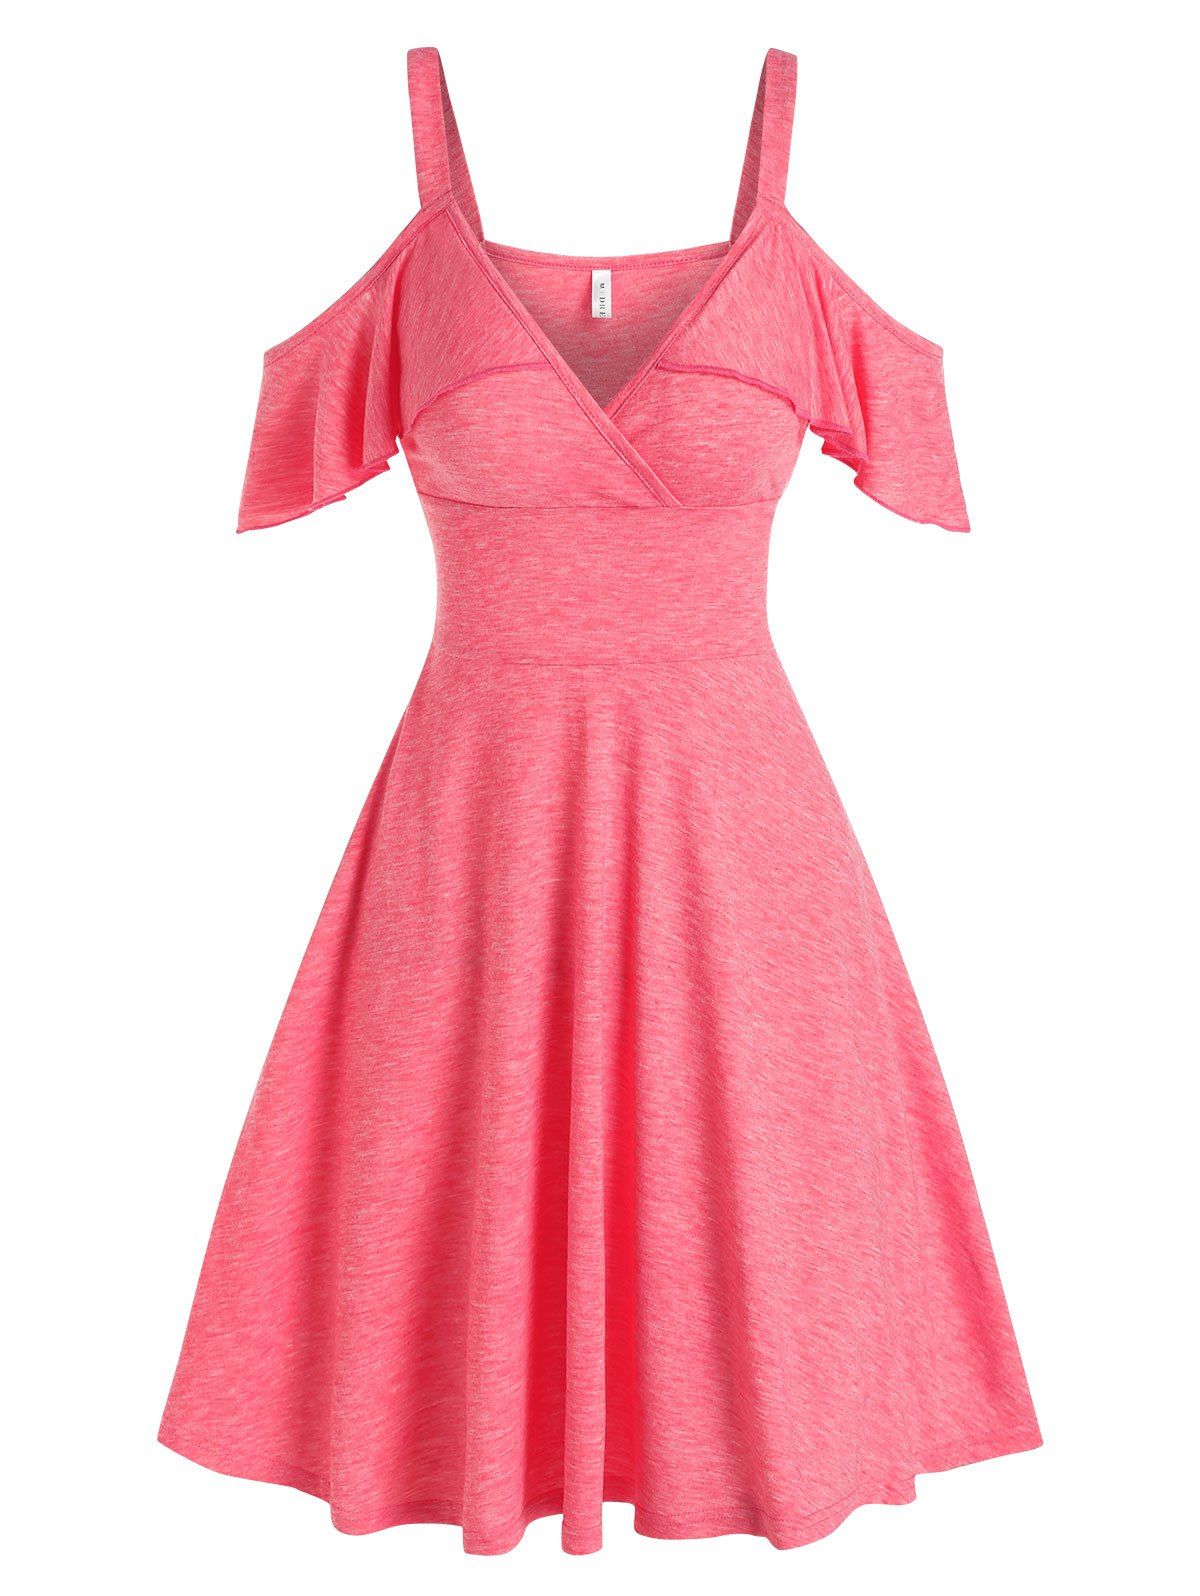 Ruffled Cold Shoulder Mini Dress - LIGHT PINK XL